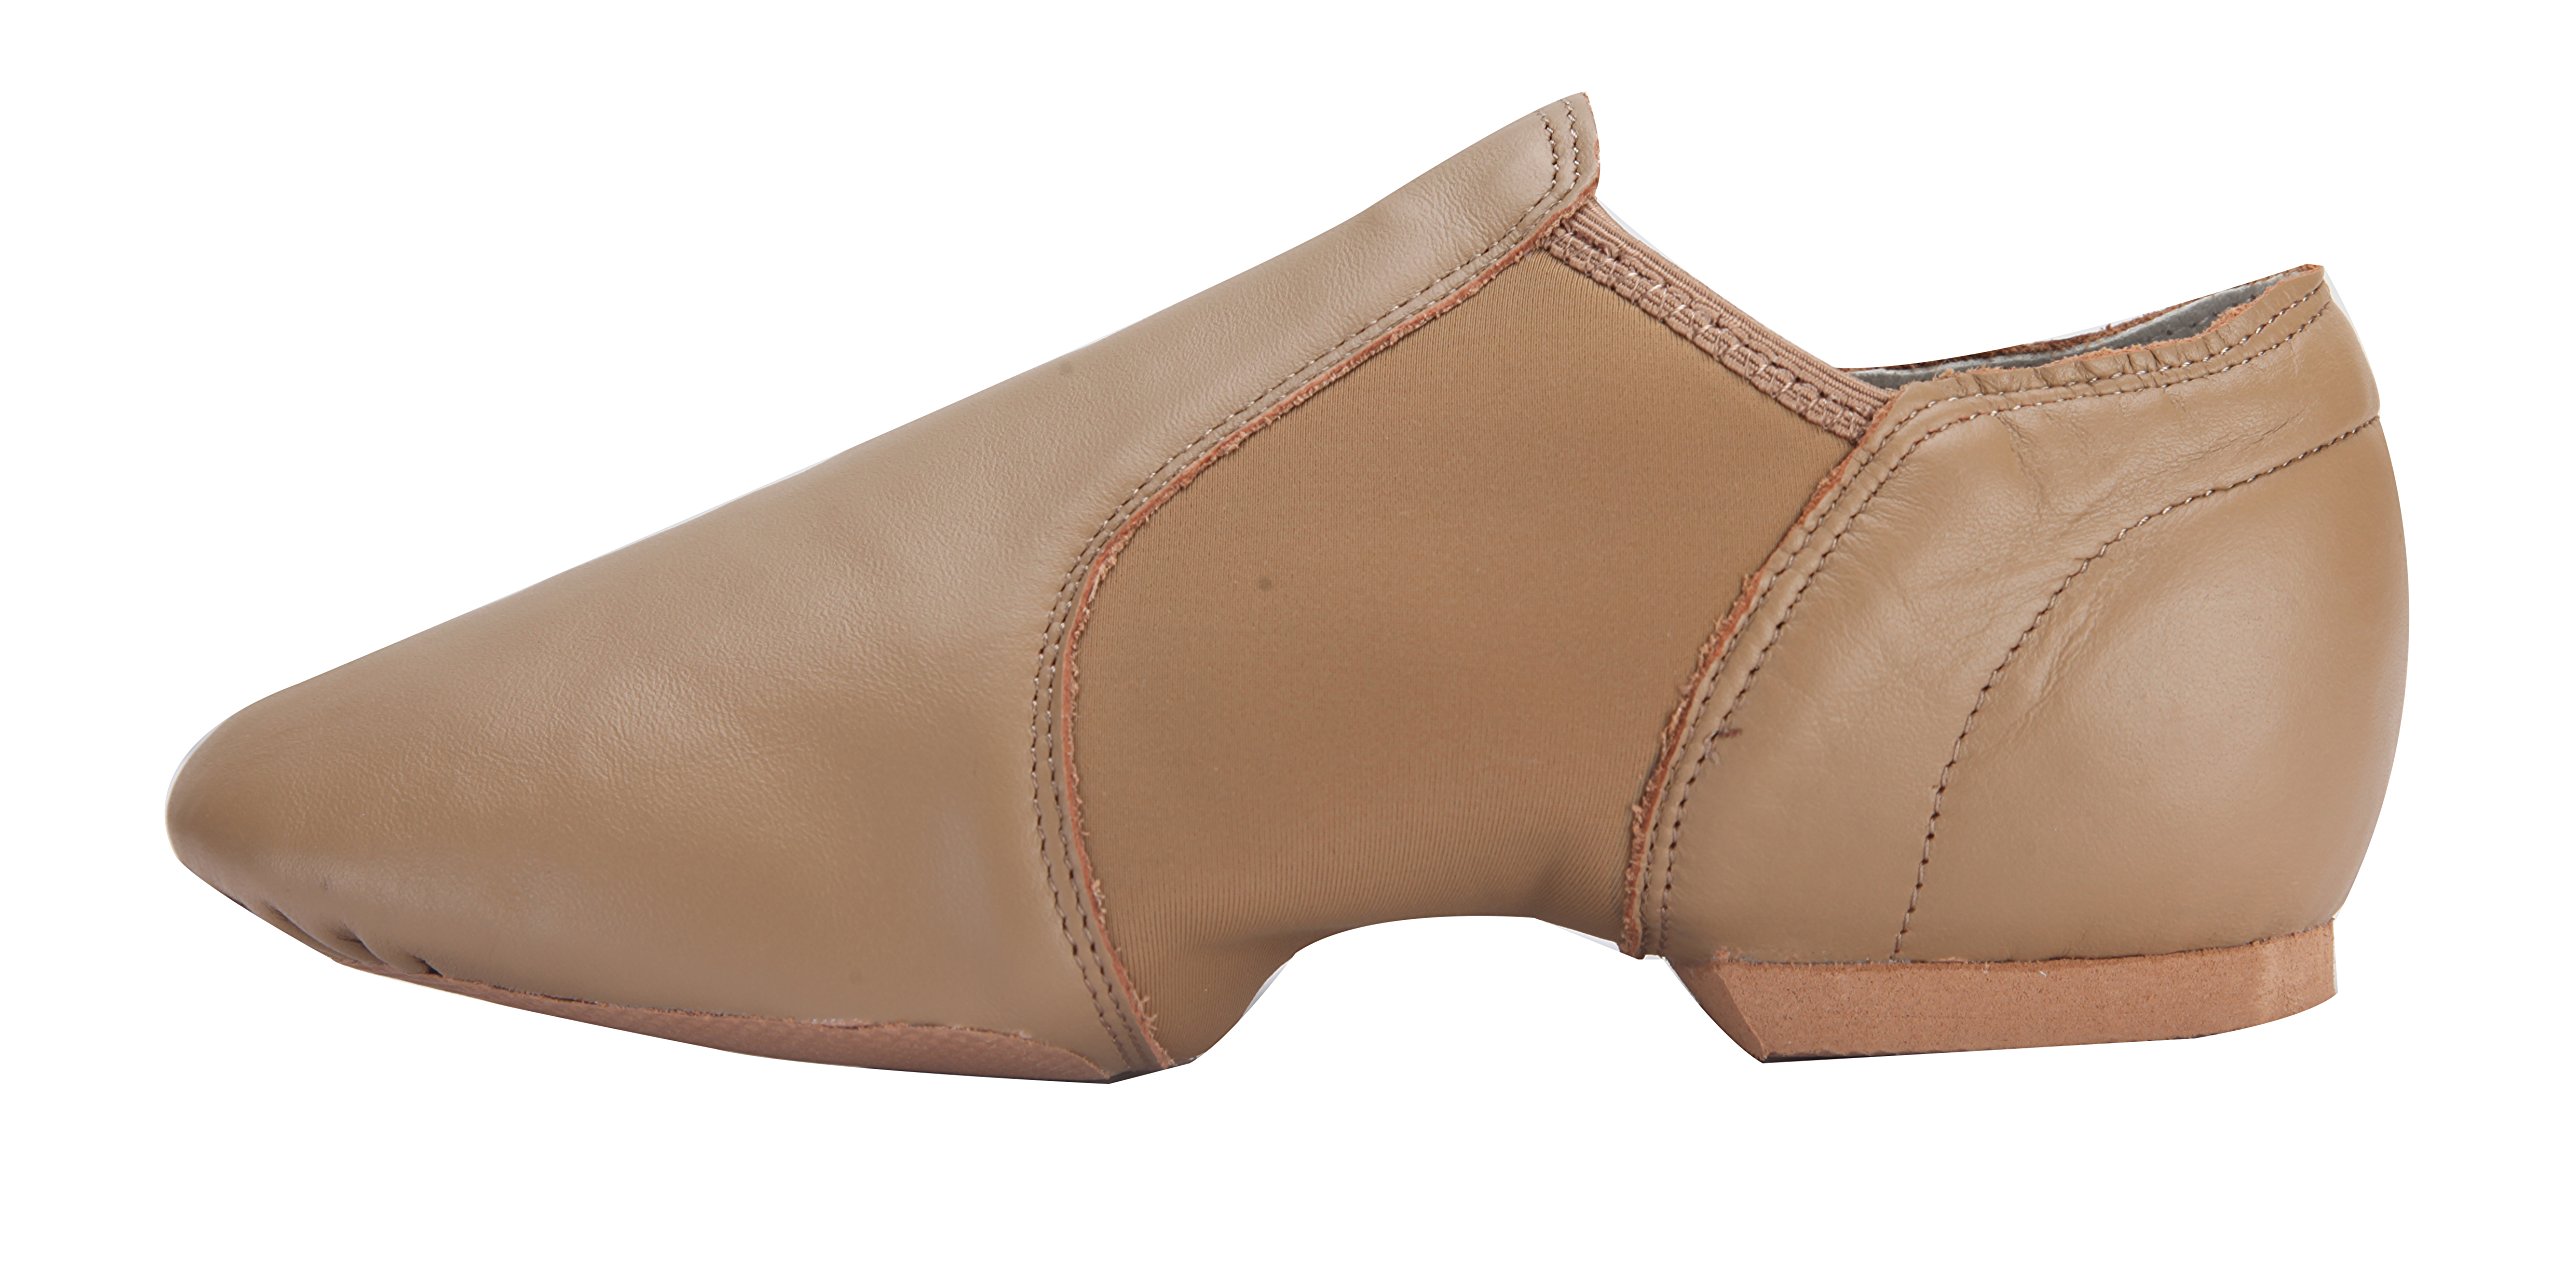 Linodes Leather Jazz Shoe Slip On for Girls and Boys (Toddler/Little Kid/Big Kid)